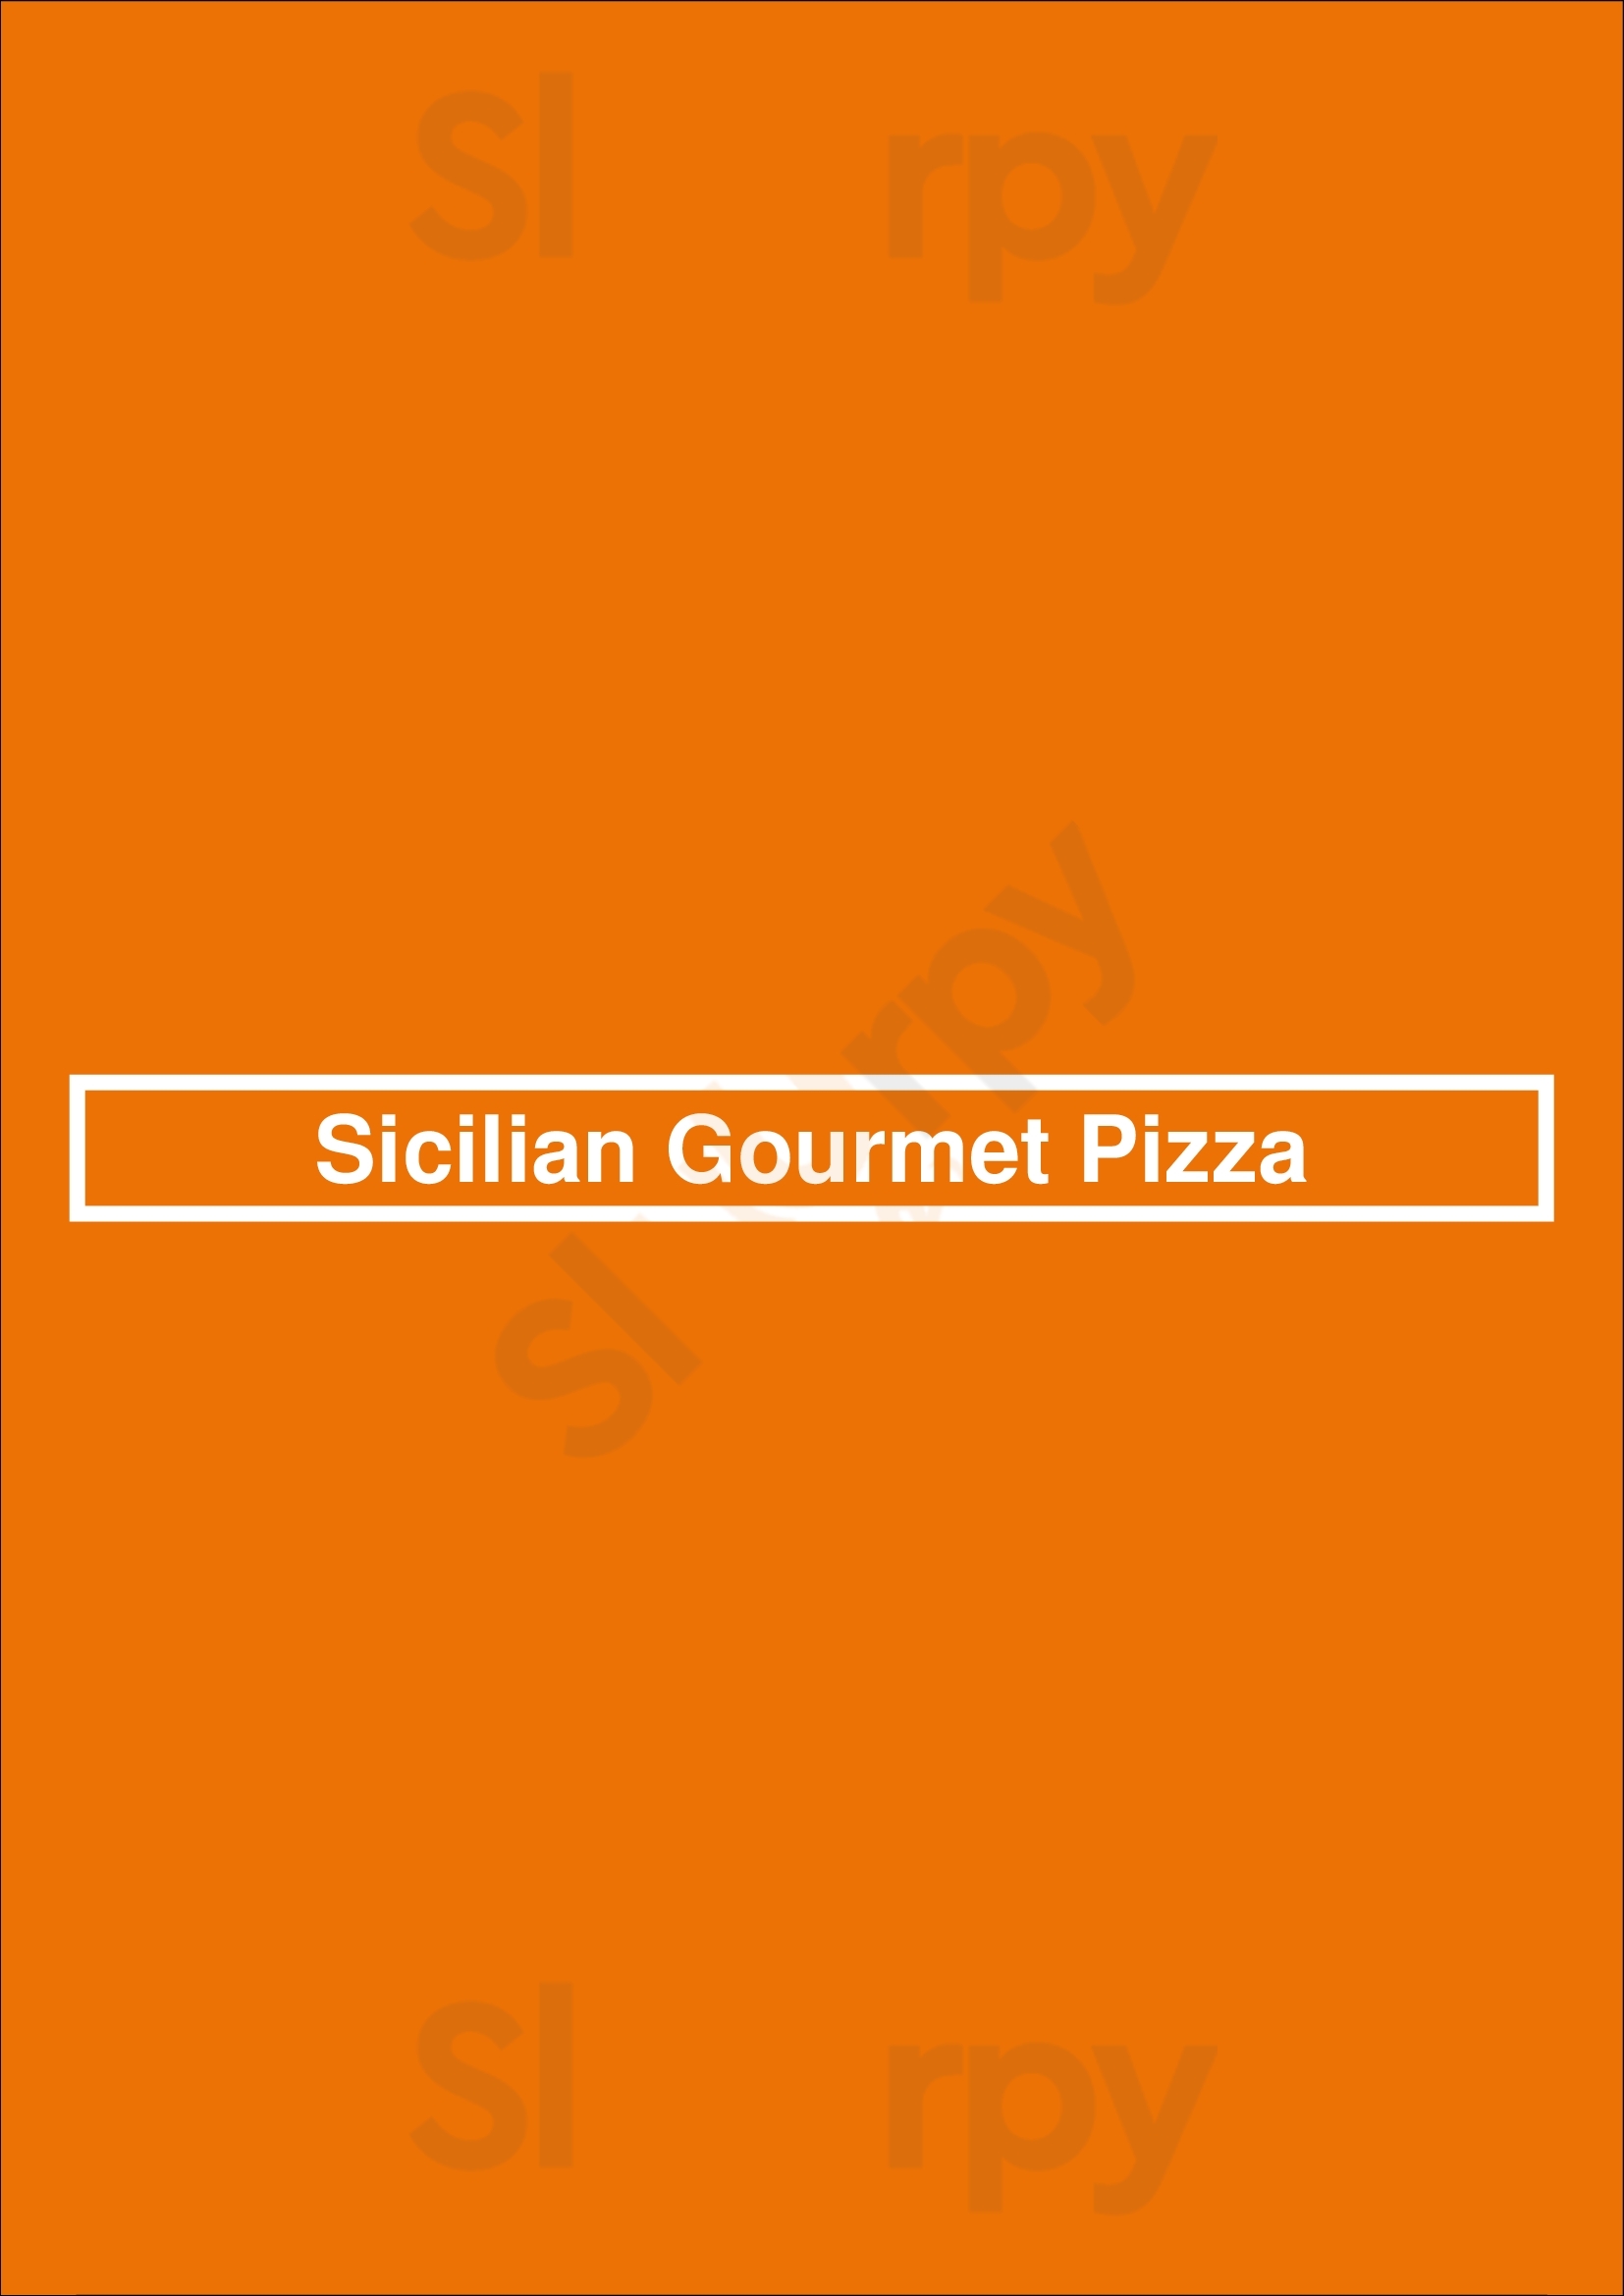 Sicilian Gourmet Pizza Barrie Menu - 1